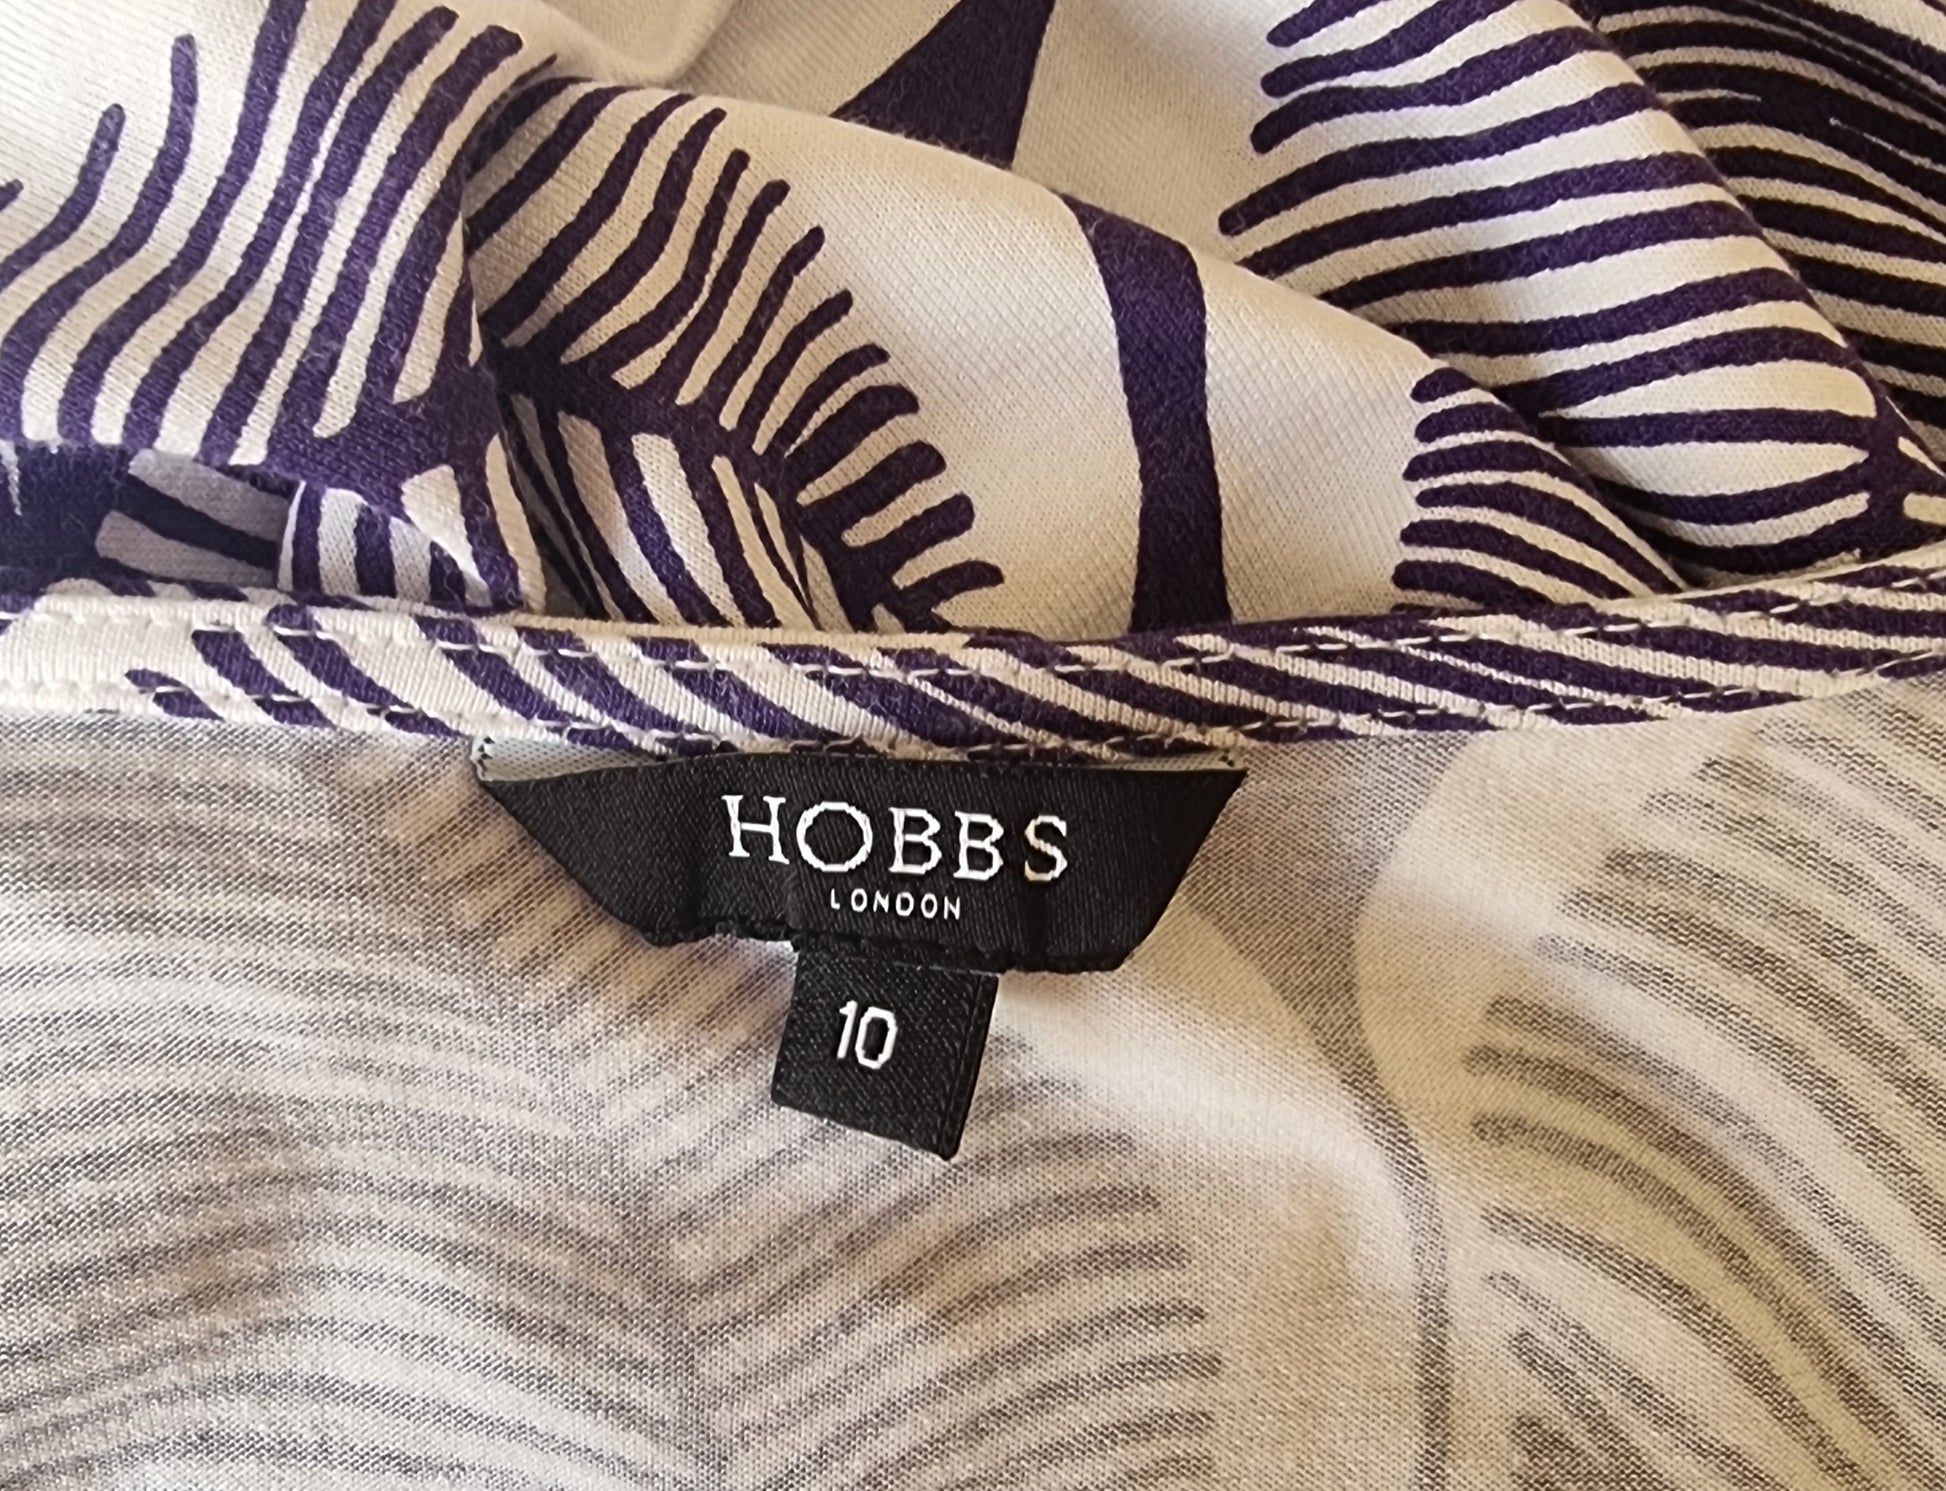 Hobbs Vintage Navy & White Leaf Print Jersey Wrap Dress UK 10 US 6 EU 38 Timeless Fashions